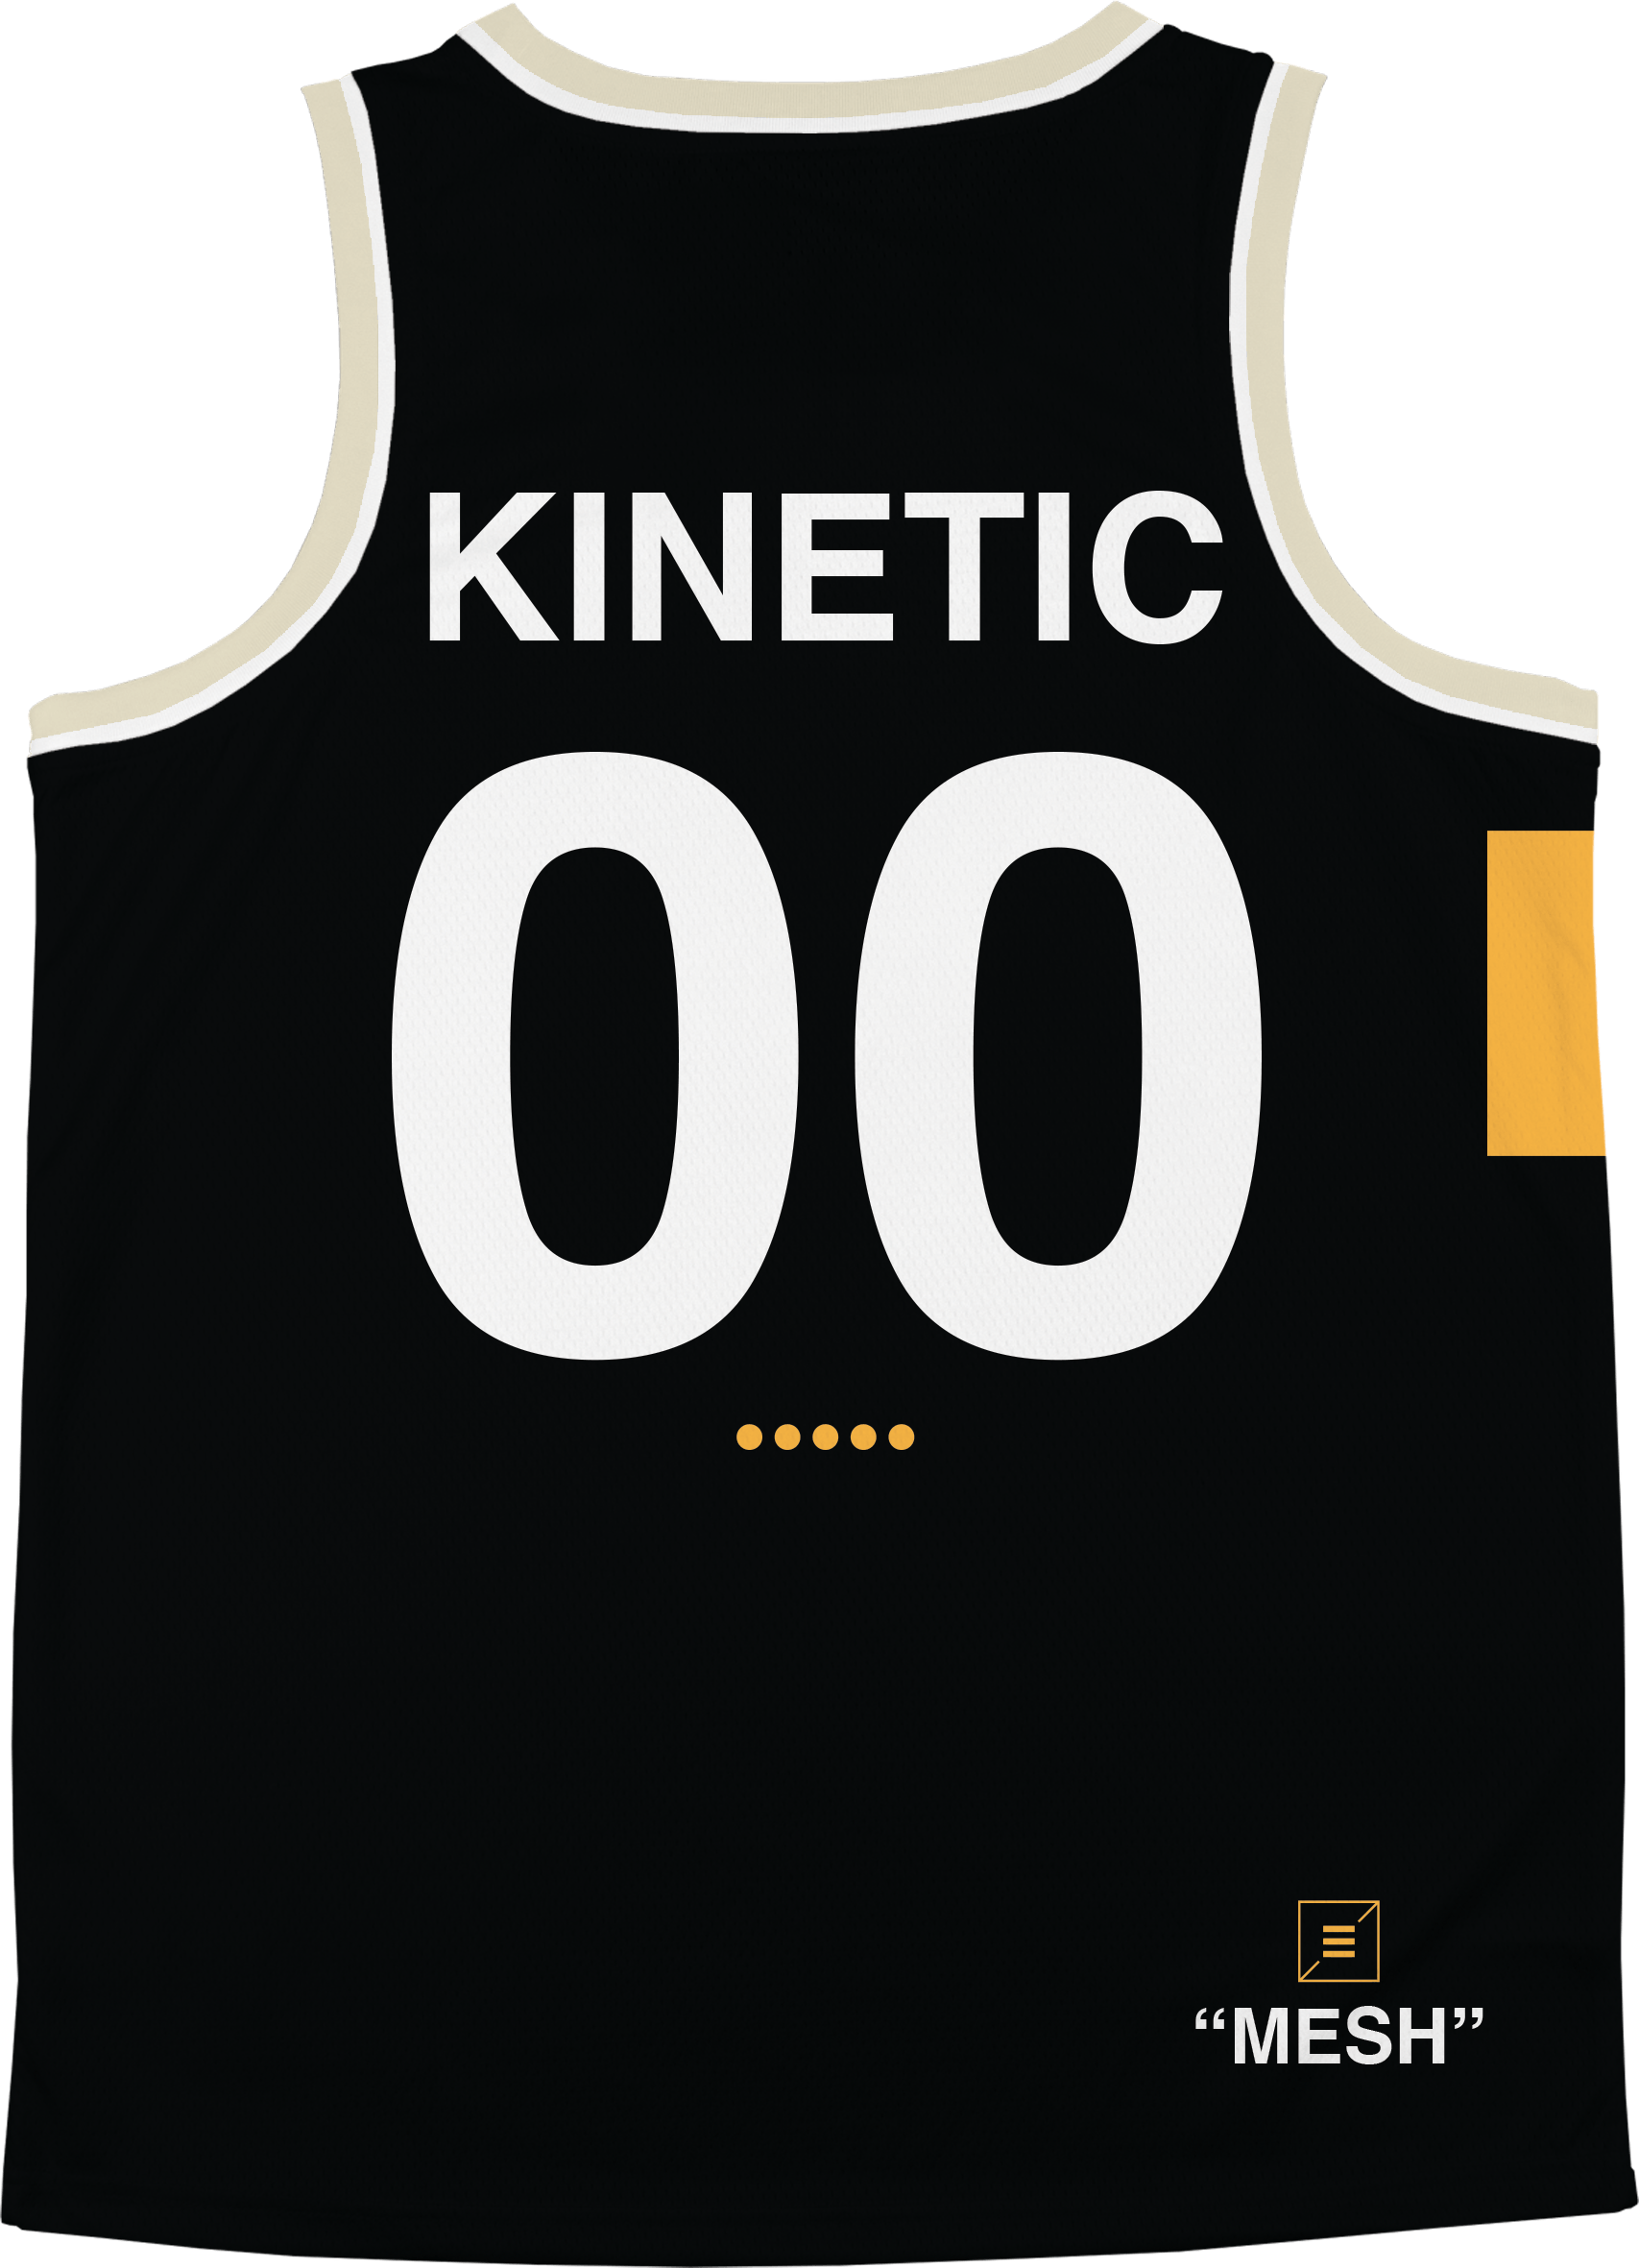 Kappa Delta Rho - OFF-MESH Basketball Jersey - Kinetic Society